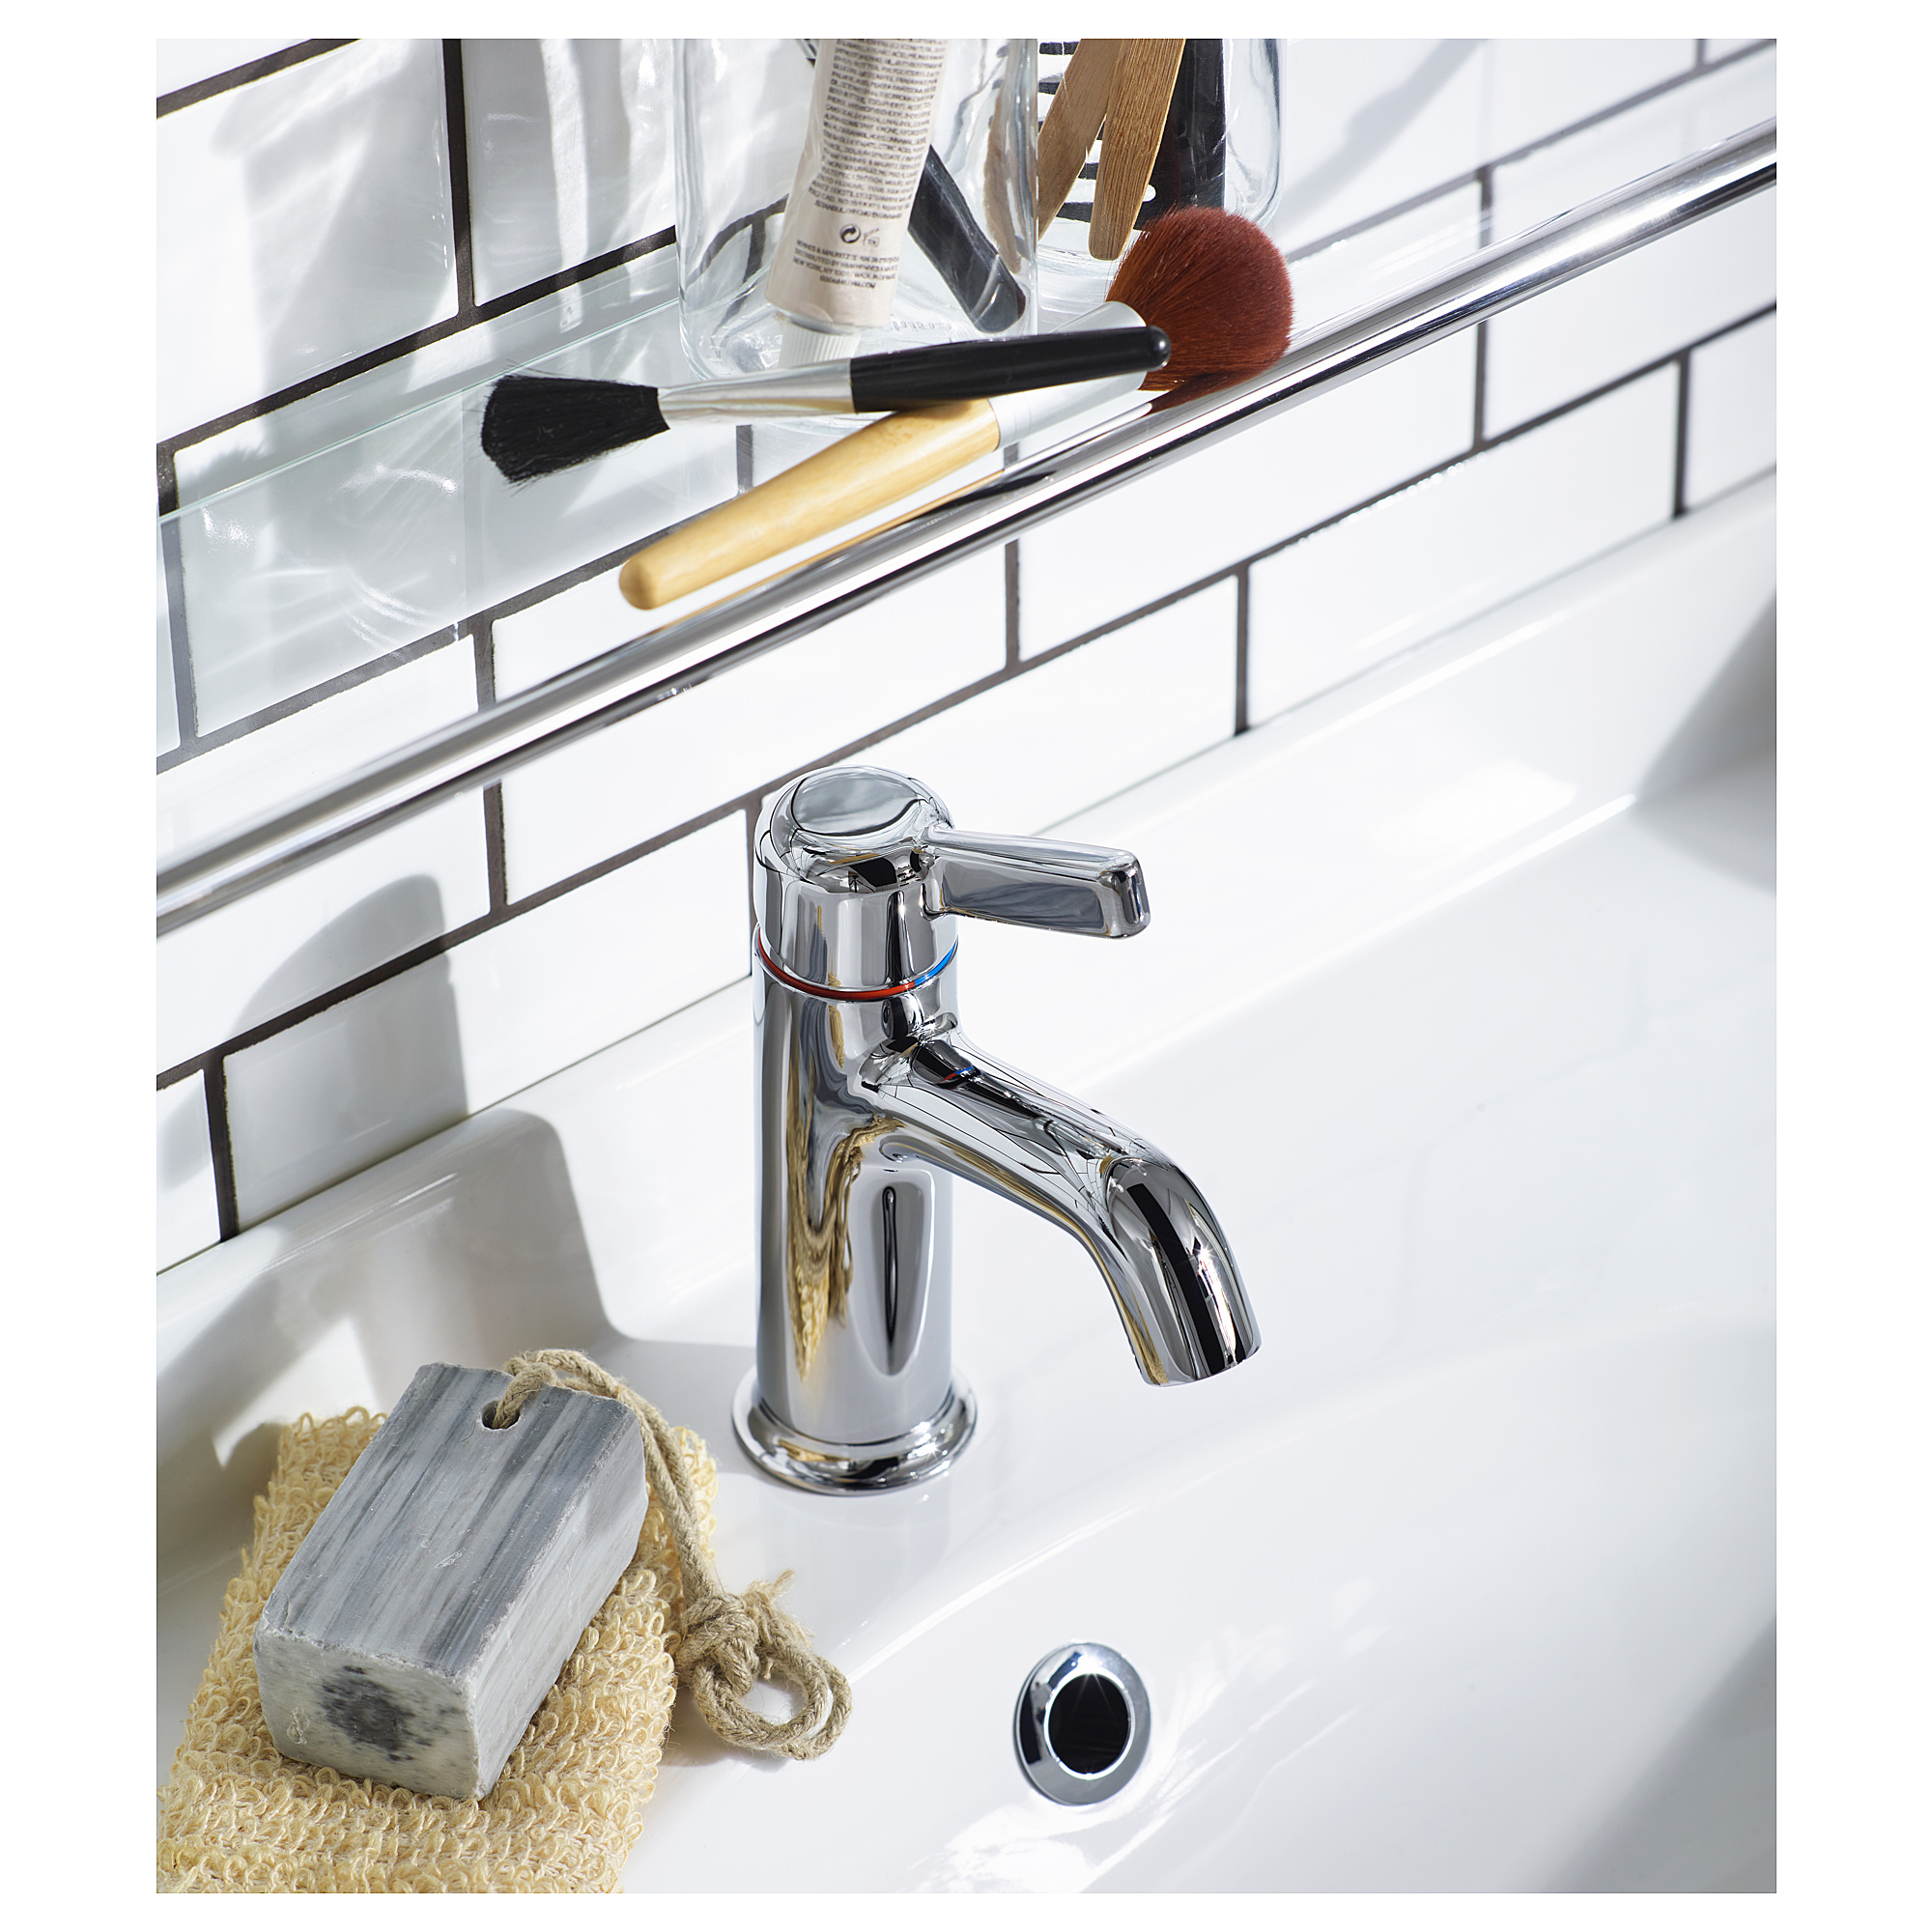 VOXNAN wash-basin mixer tap with strainer